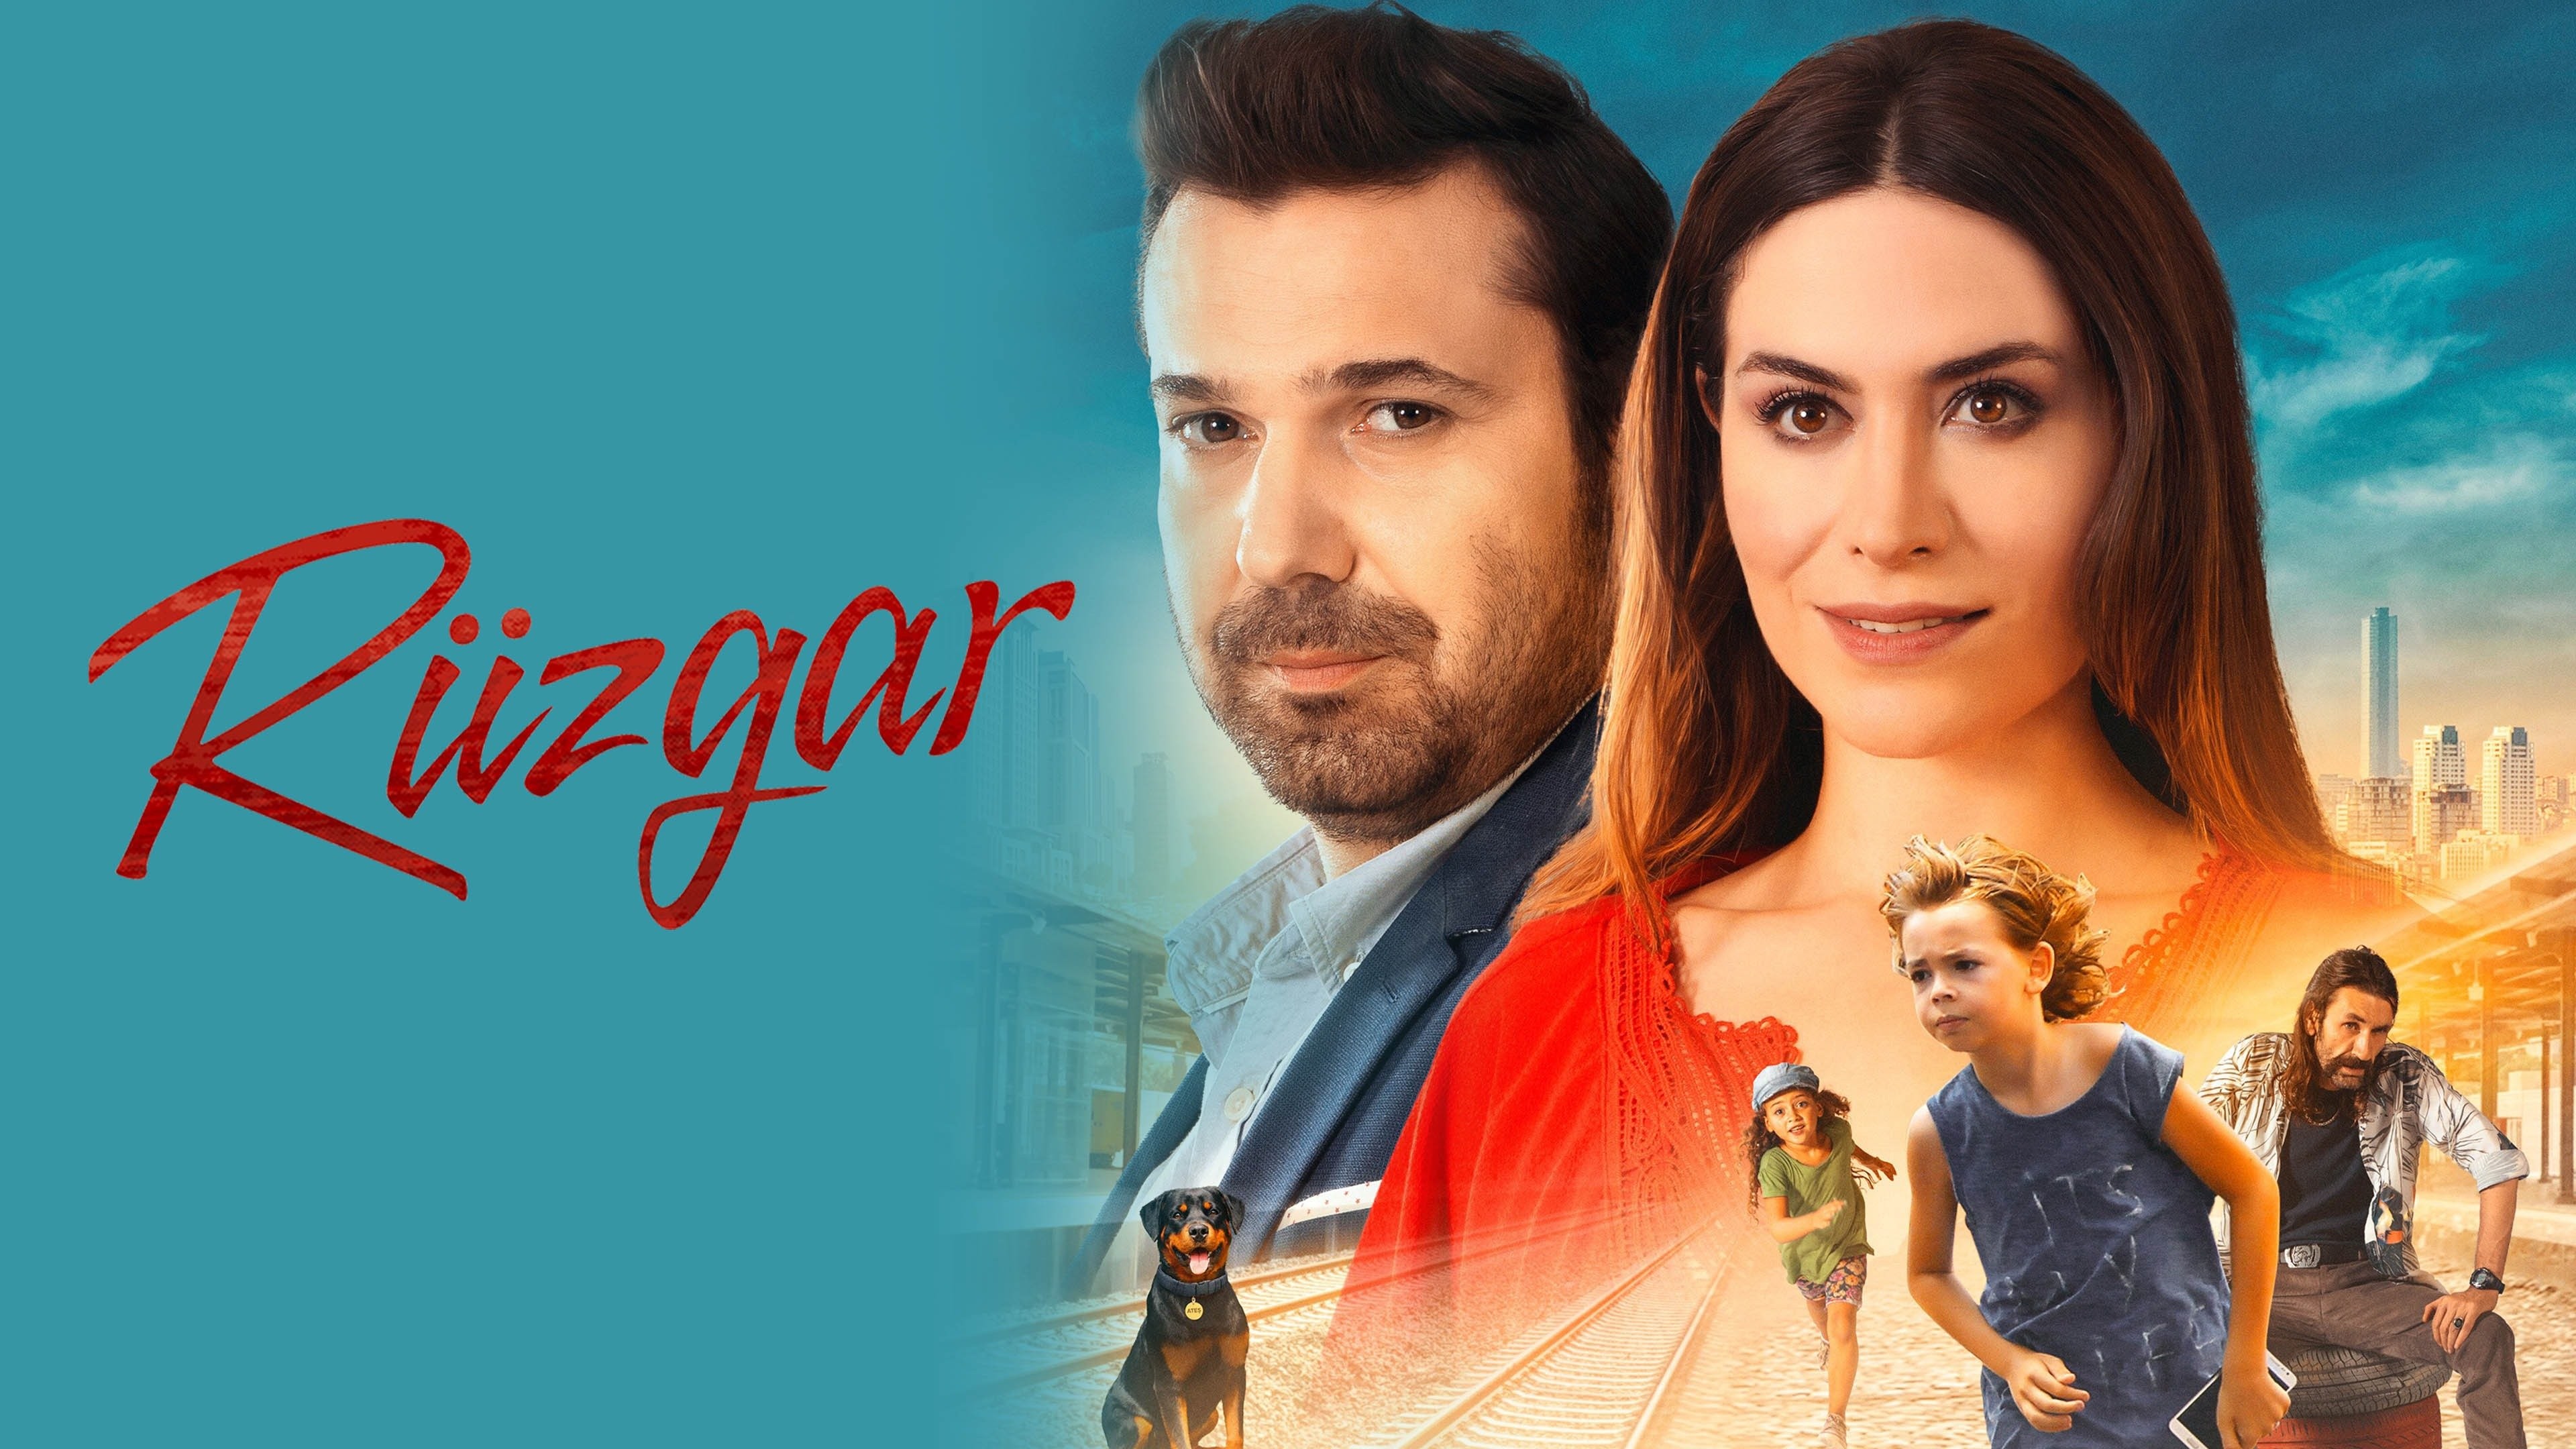 The Red Room Rüzgar Gülü (TV Episode 2020) - IMDb